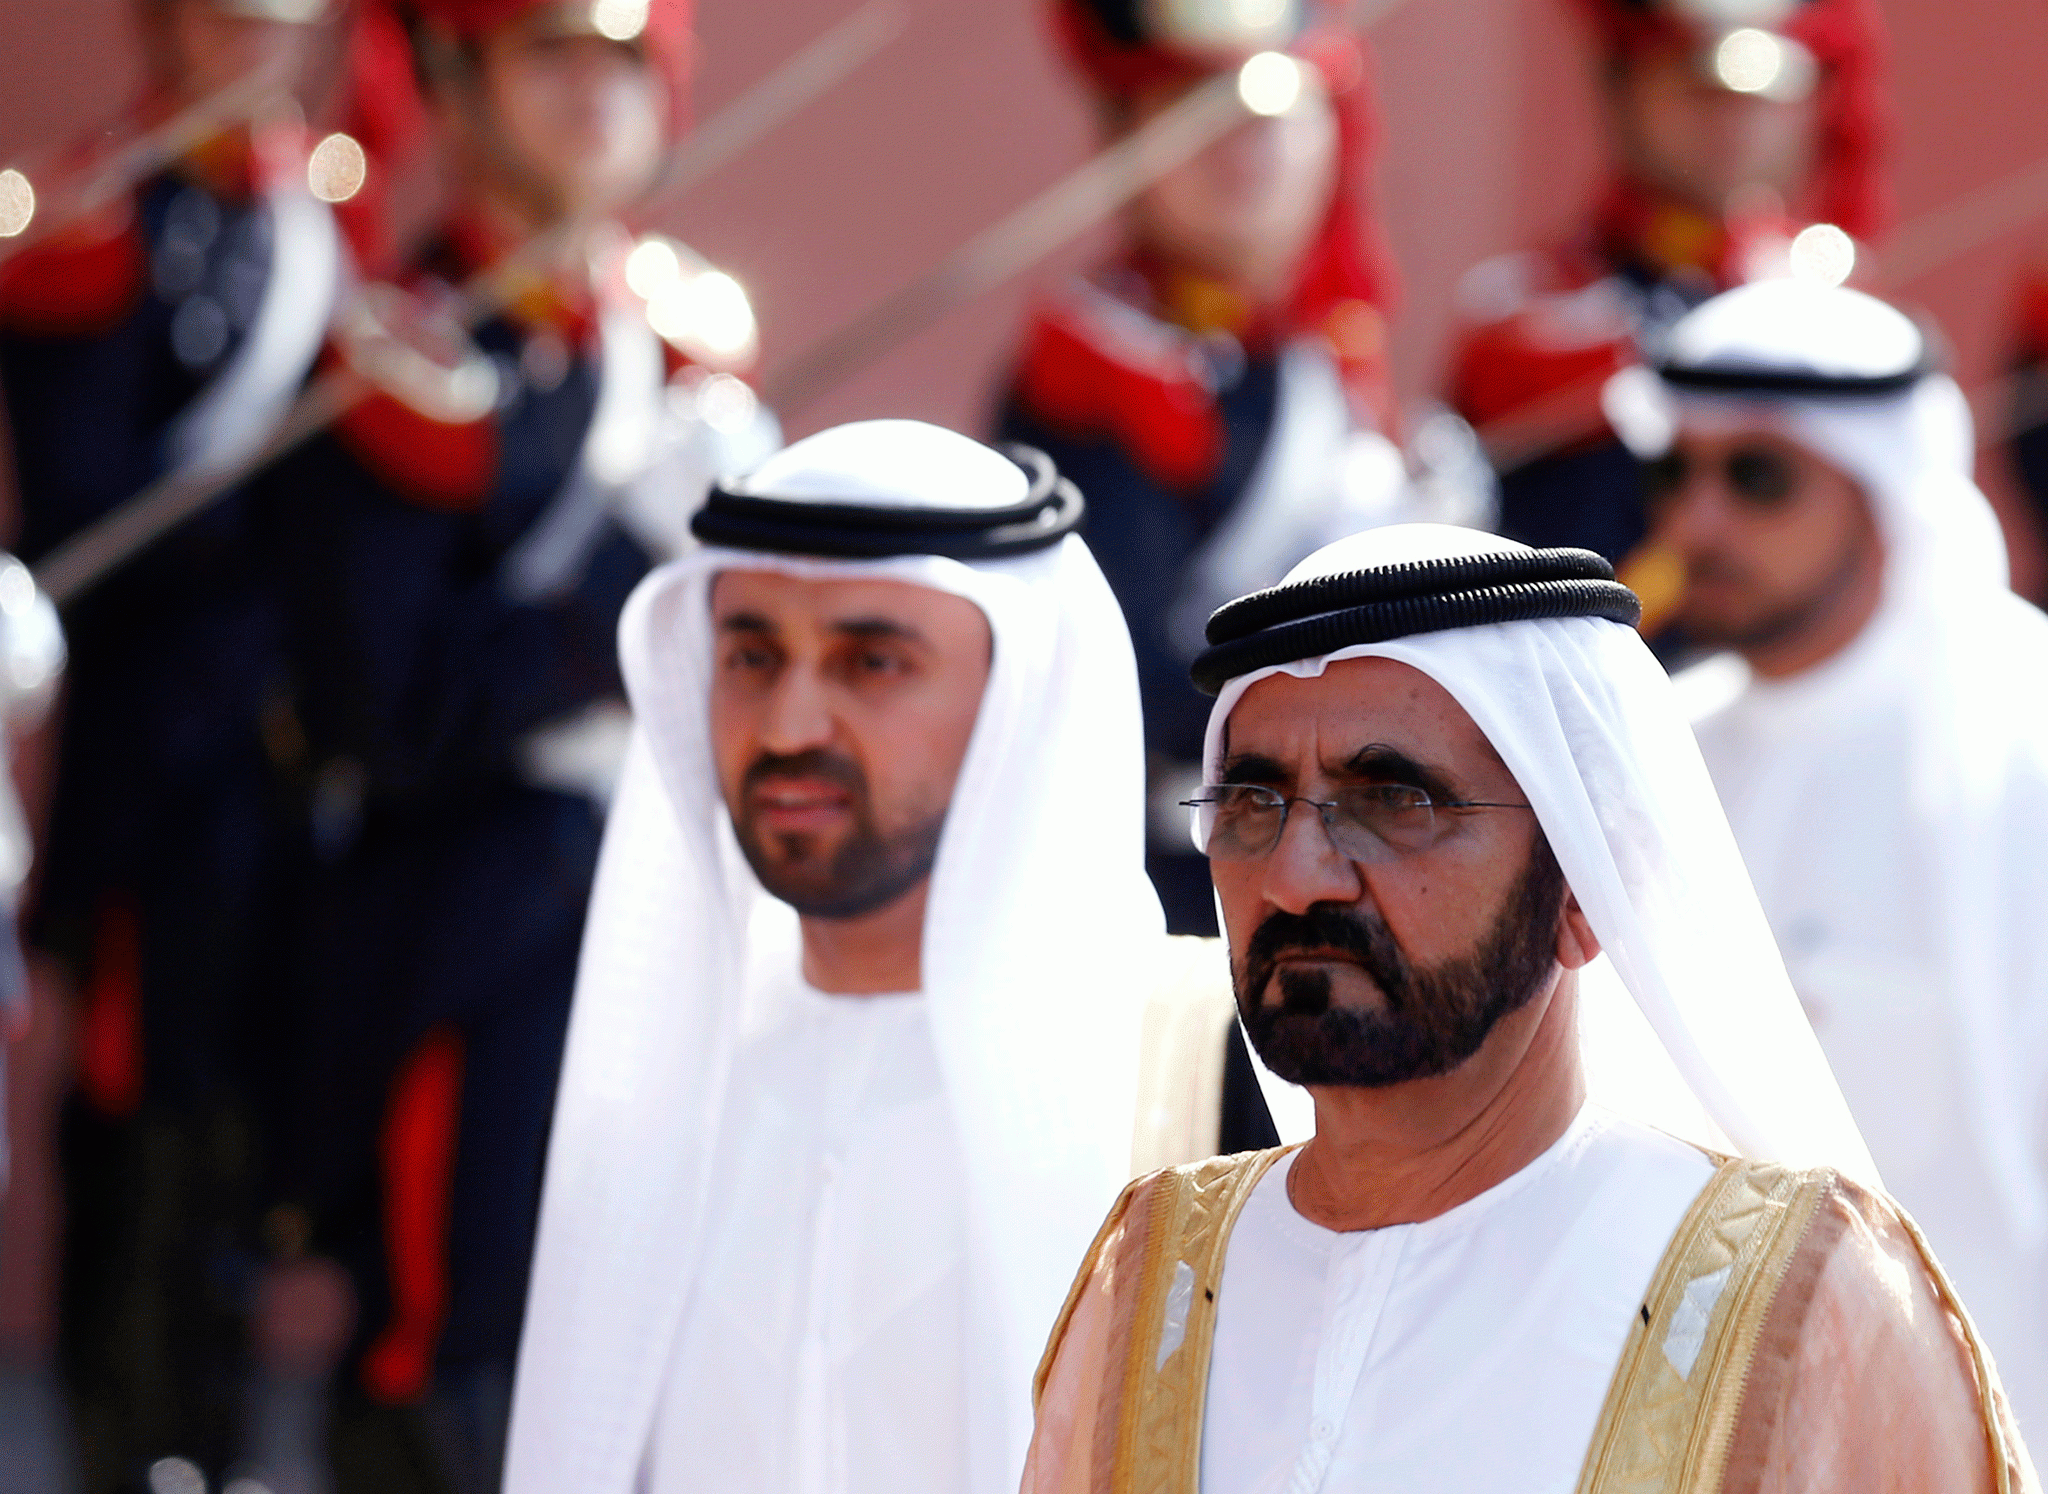 Sheikh Mohammed Bin Rashid Al Maktoum, Vice President and Prime Minister of the United Arab Emirates